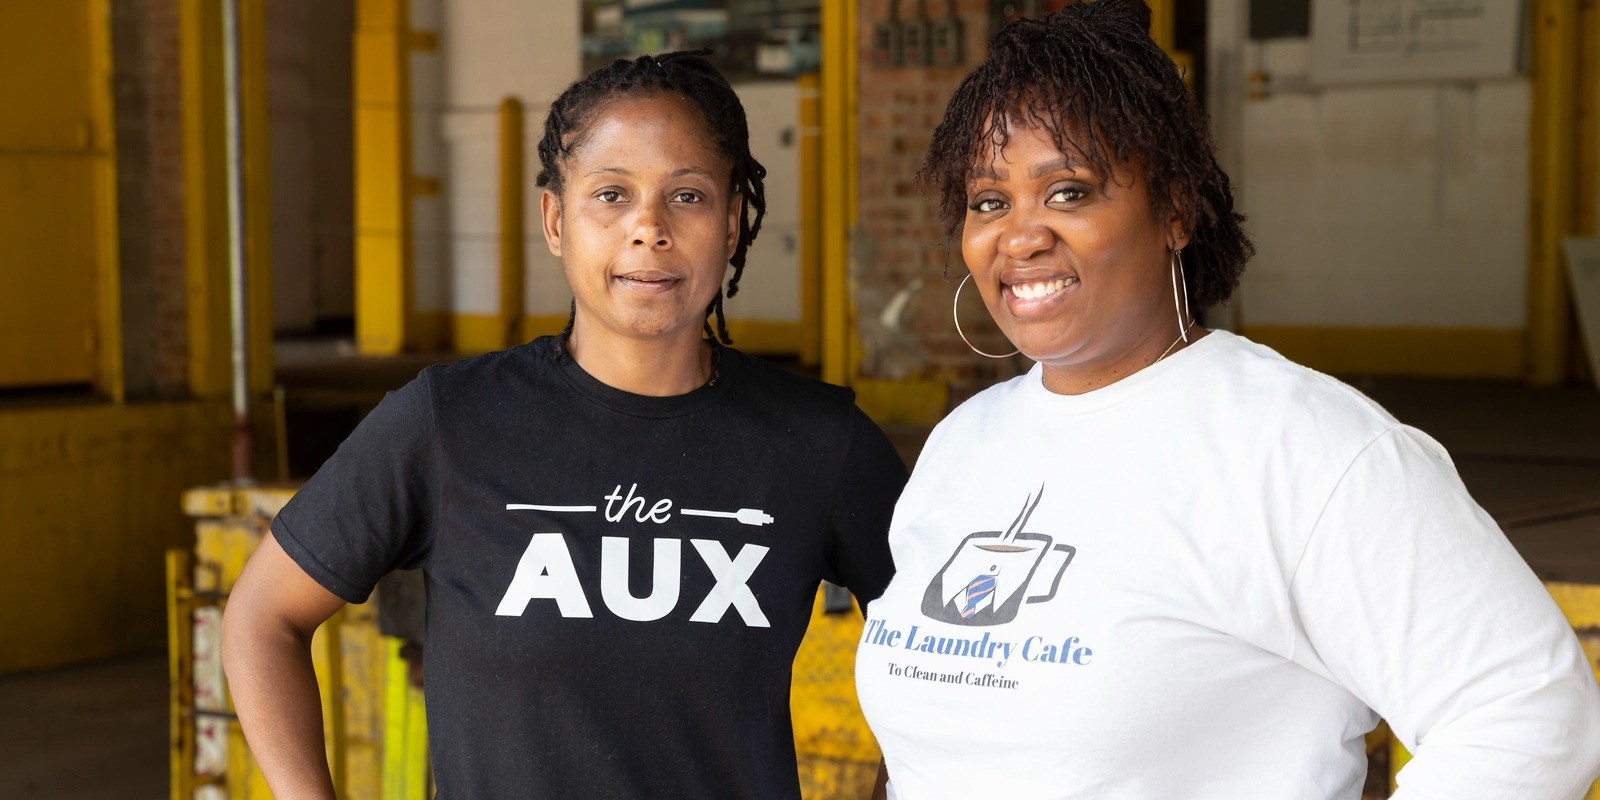 WBEZ Features The AUX: “Evanston business incubator seeks to open doors for Black entrepreneurs”